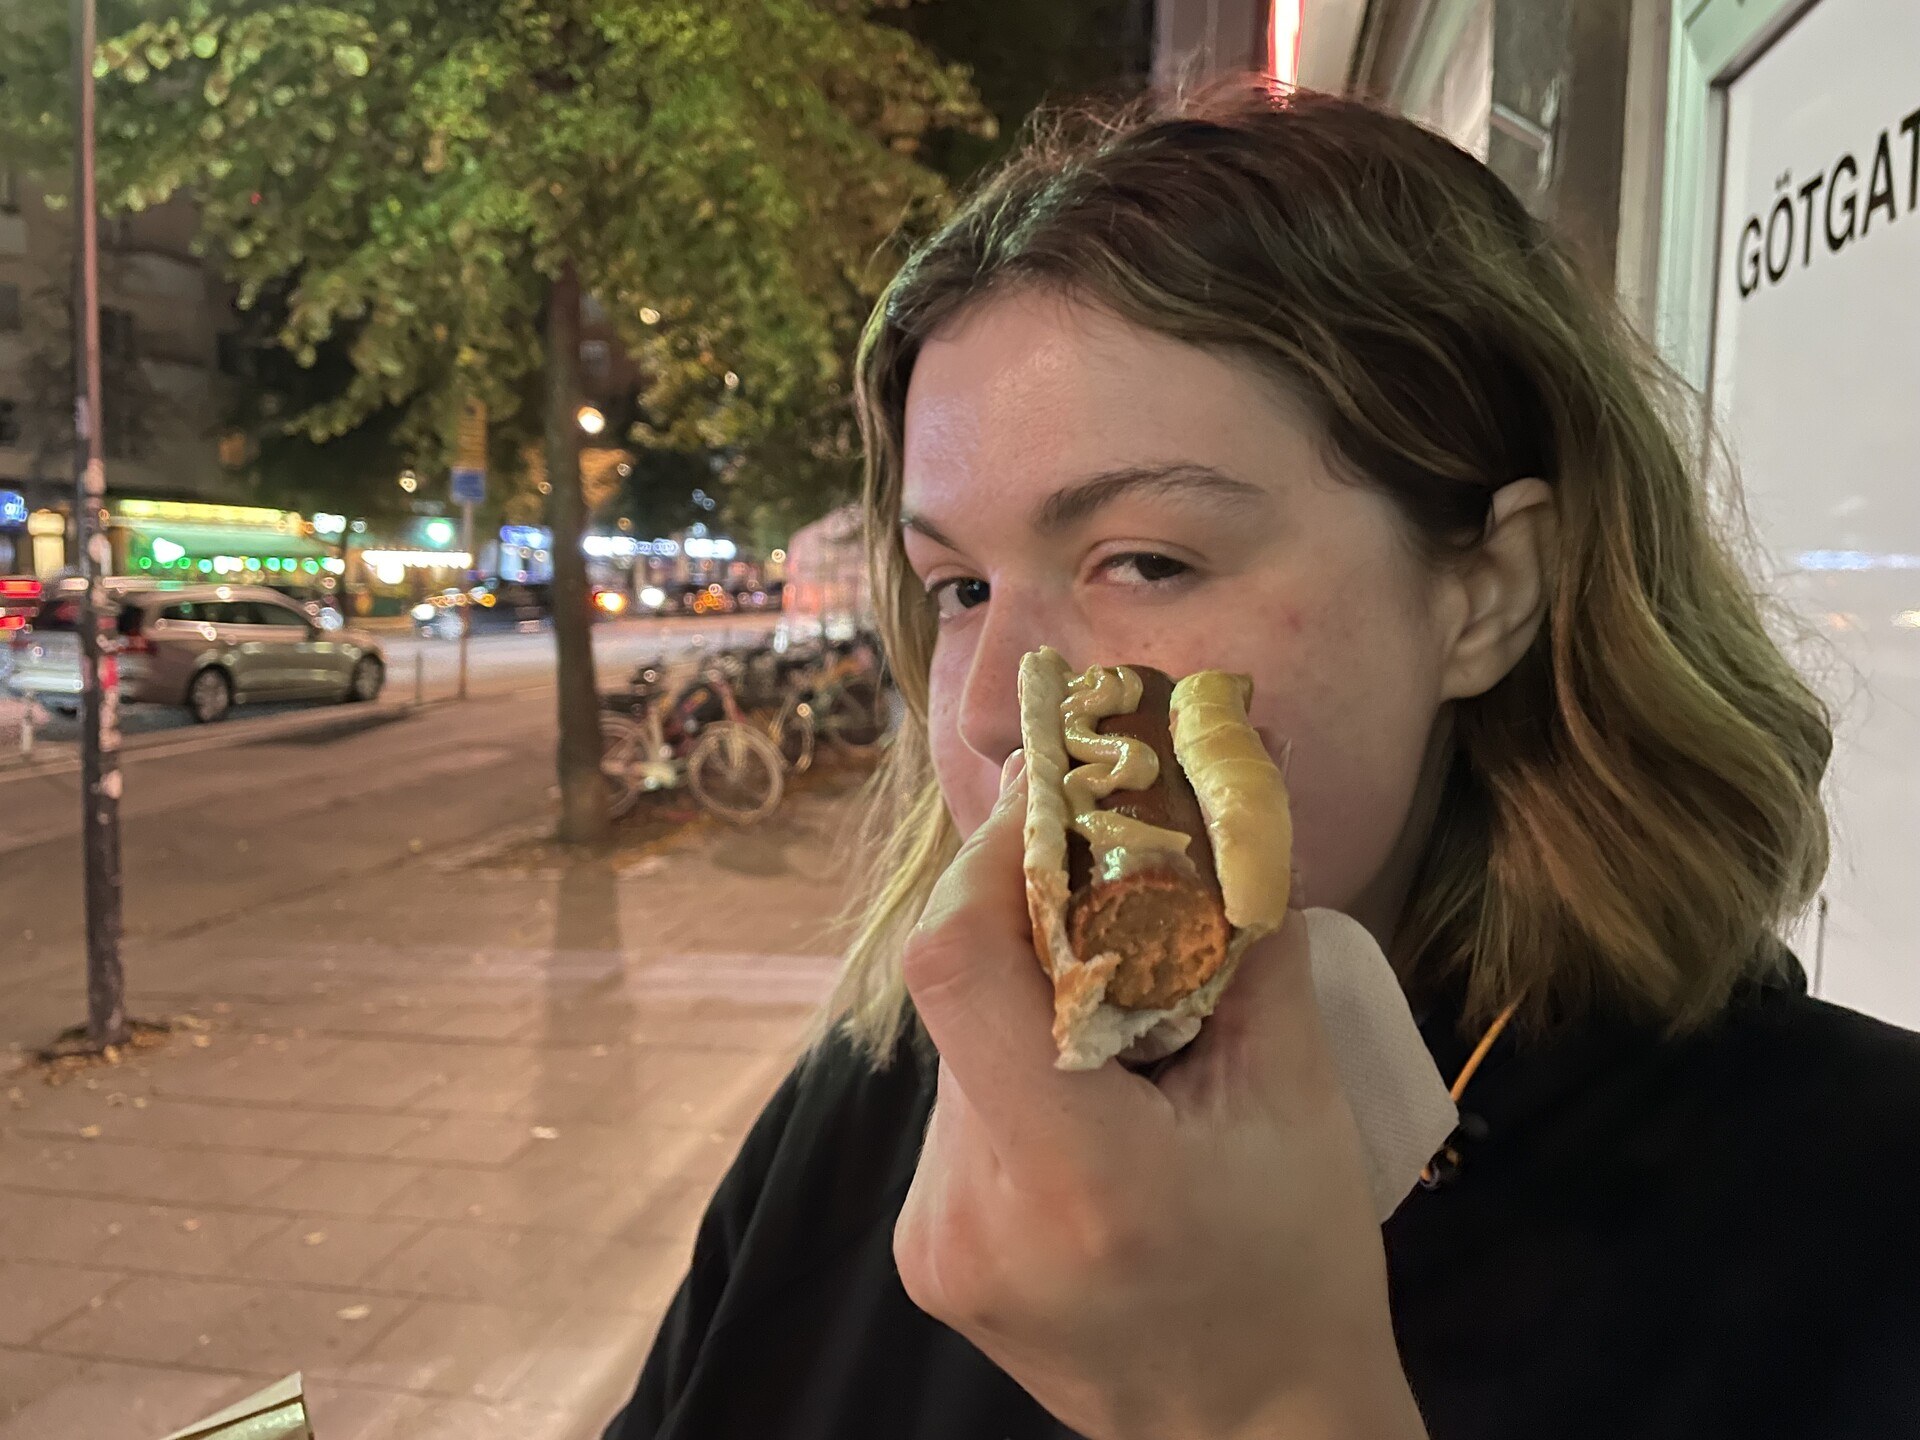 Sam ogling a half-eaten hotdog